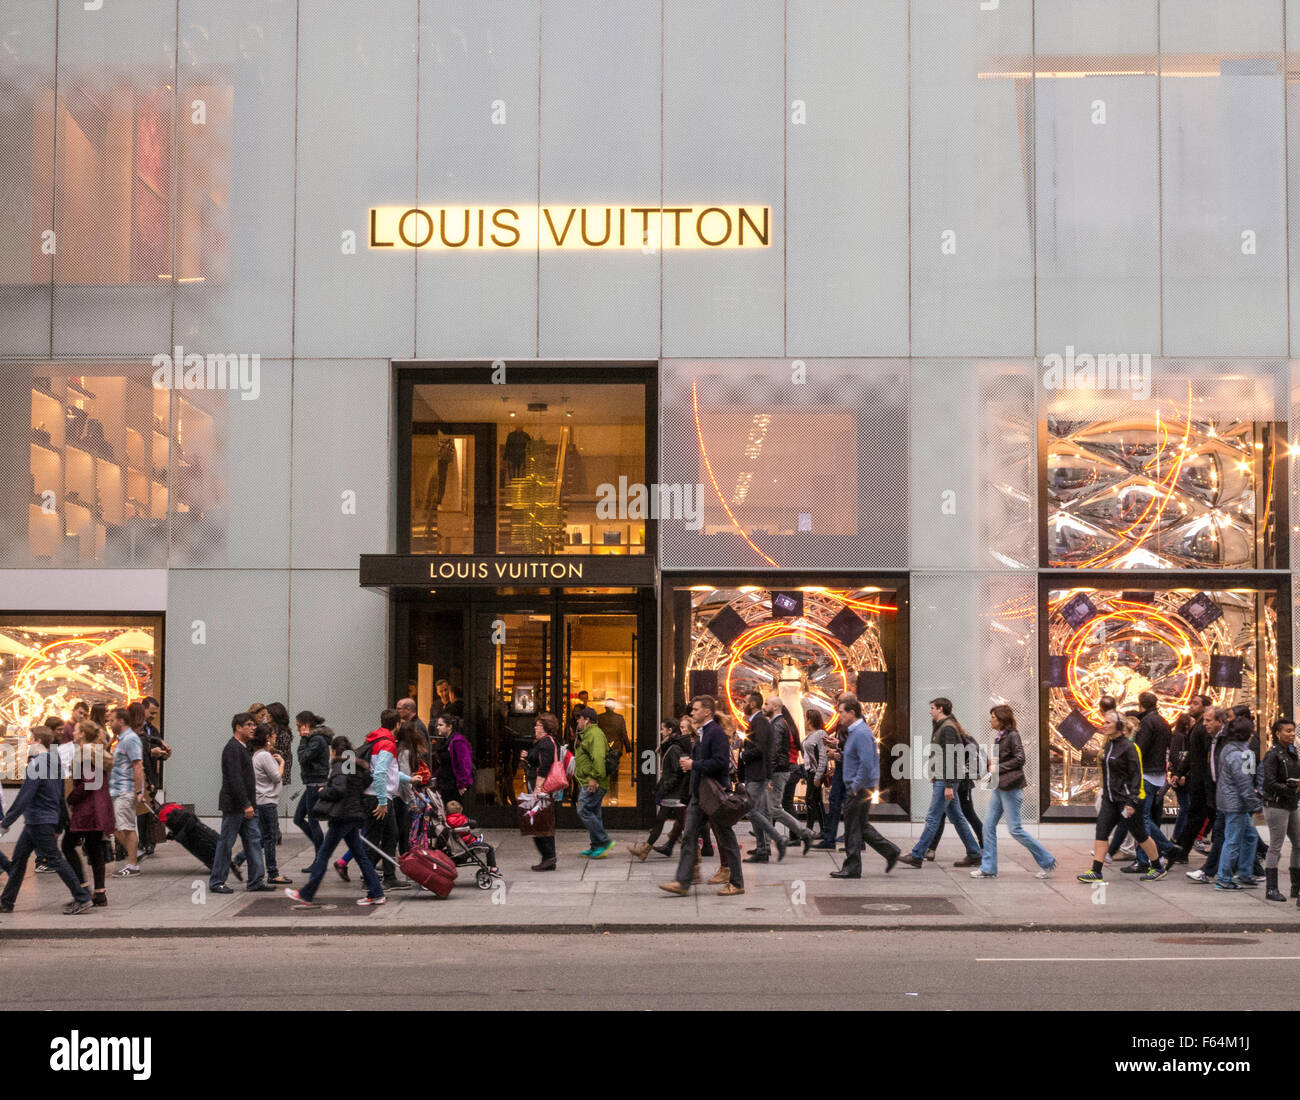 Louis Vuitton Retail Store Facade Front Entrance Fifth Avenue, NYC